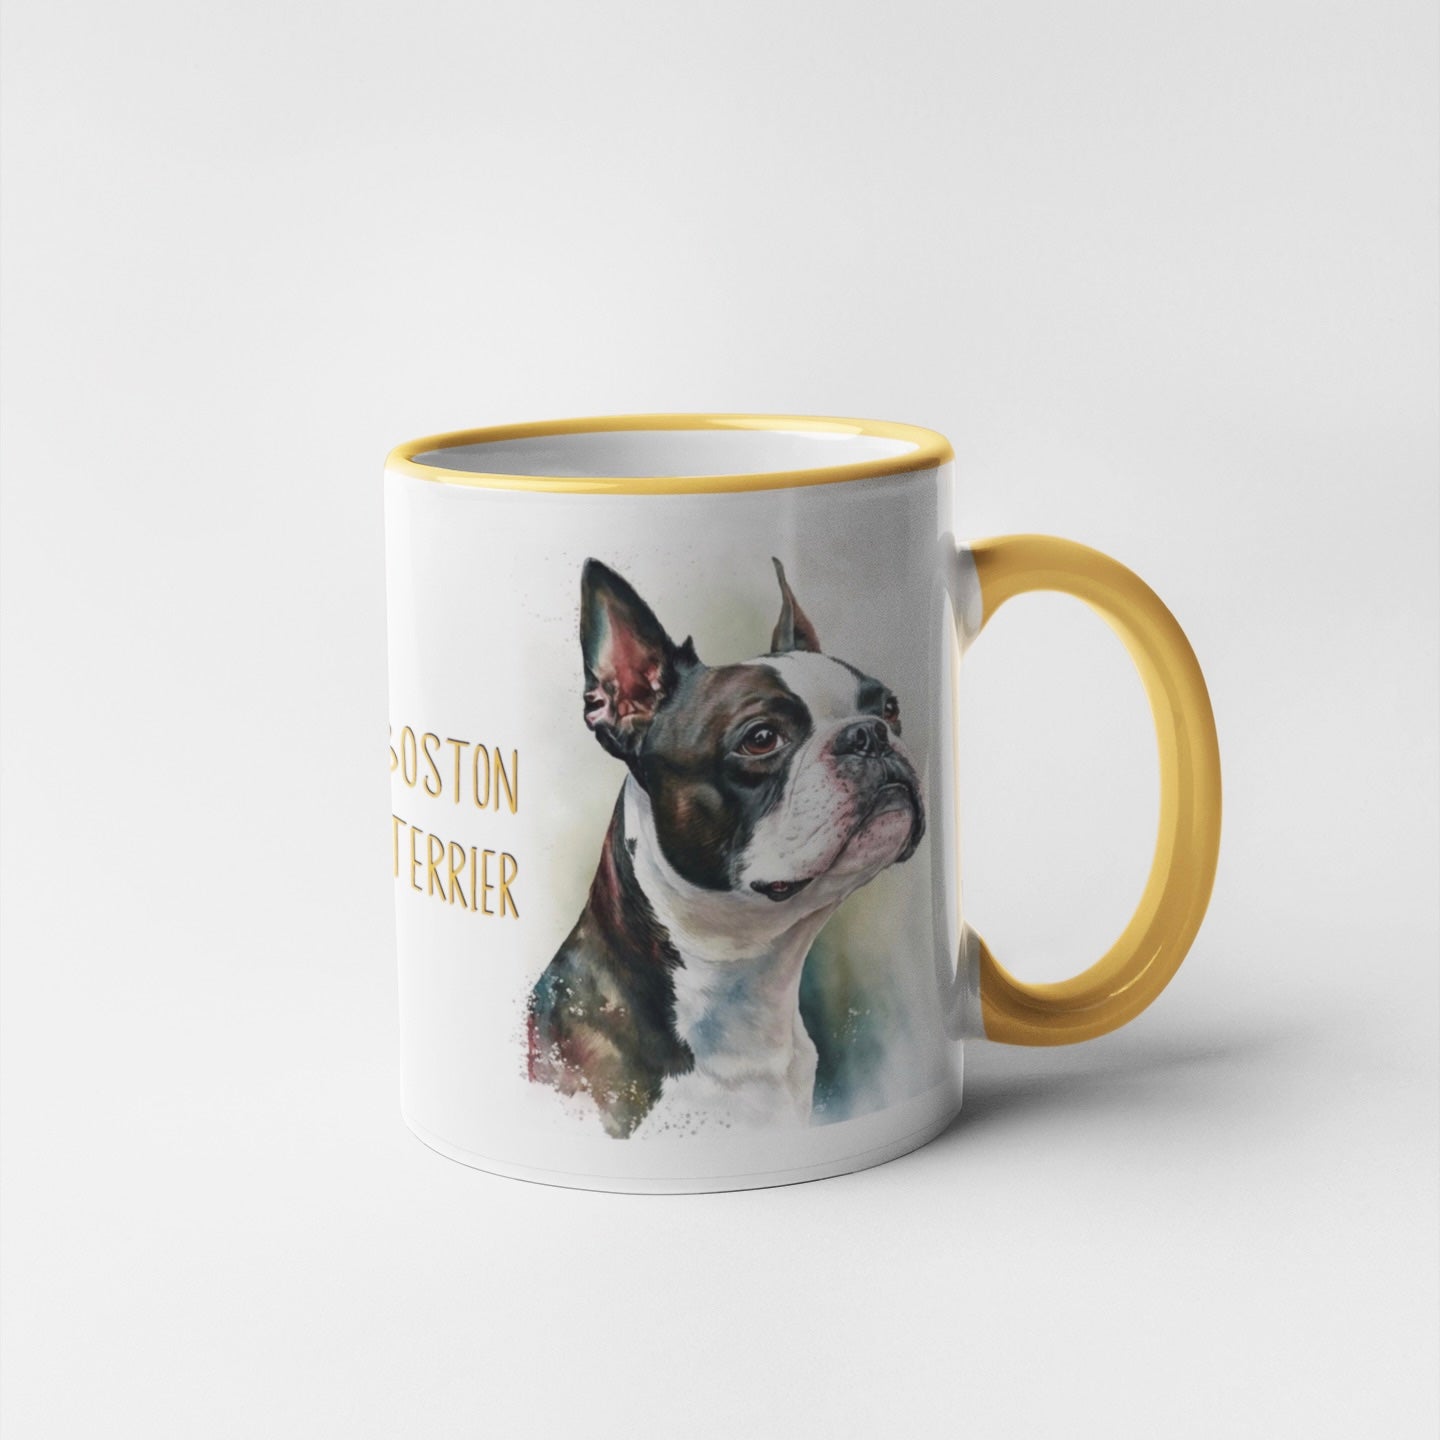 Boston Terrier Dogs Collection Art Personalised Ceramic Mug Gift Idea